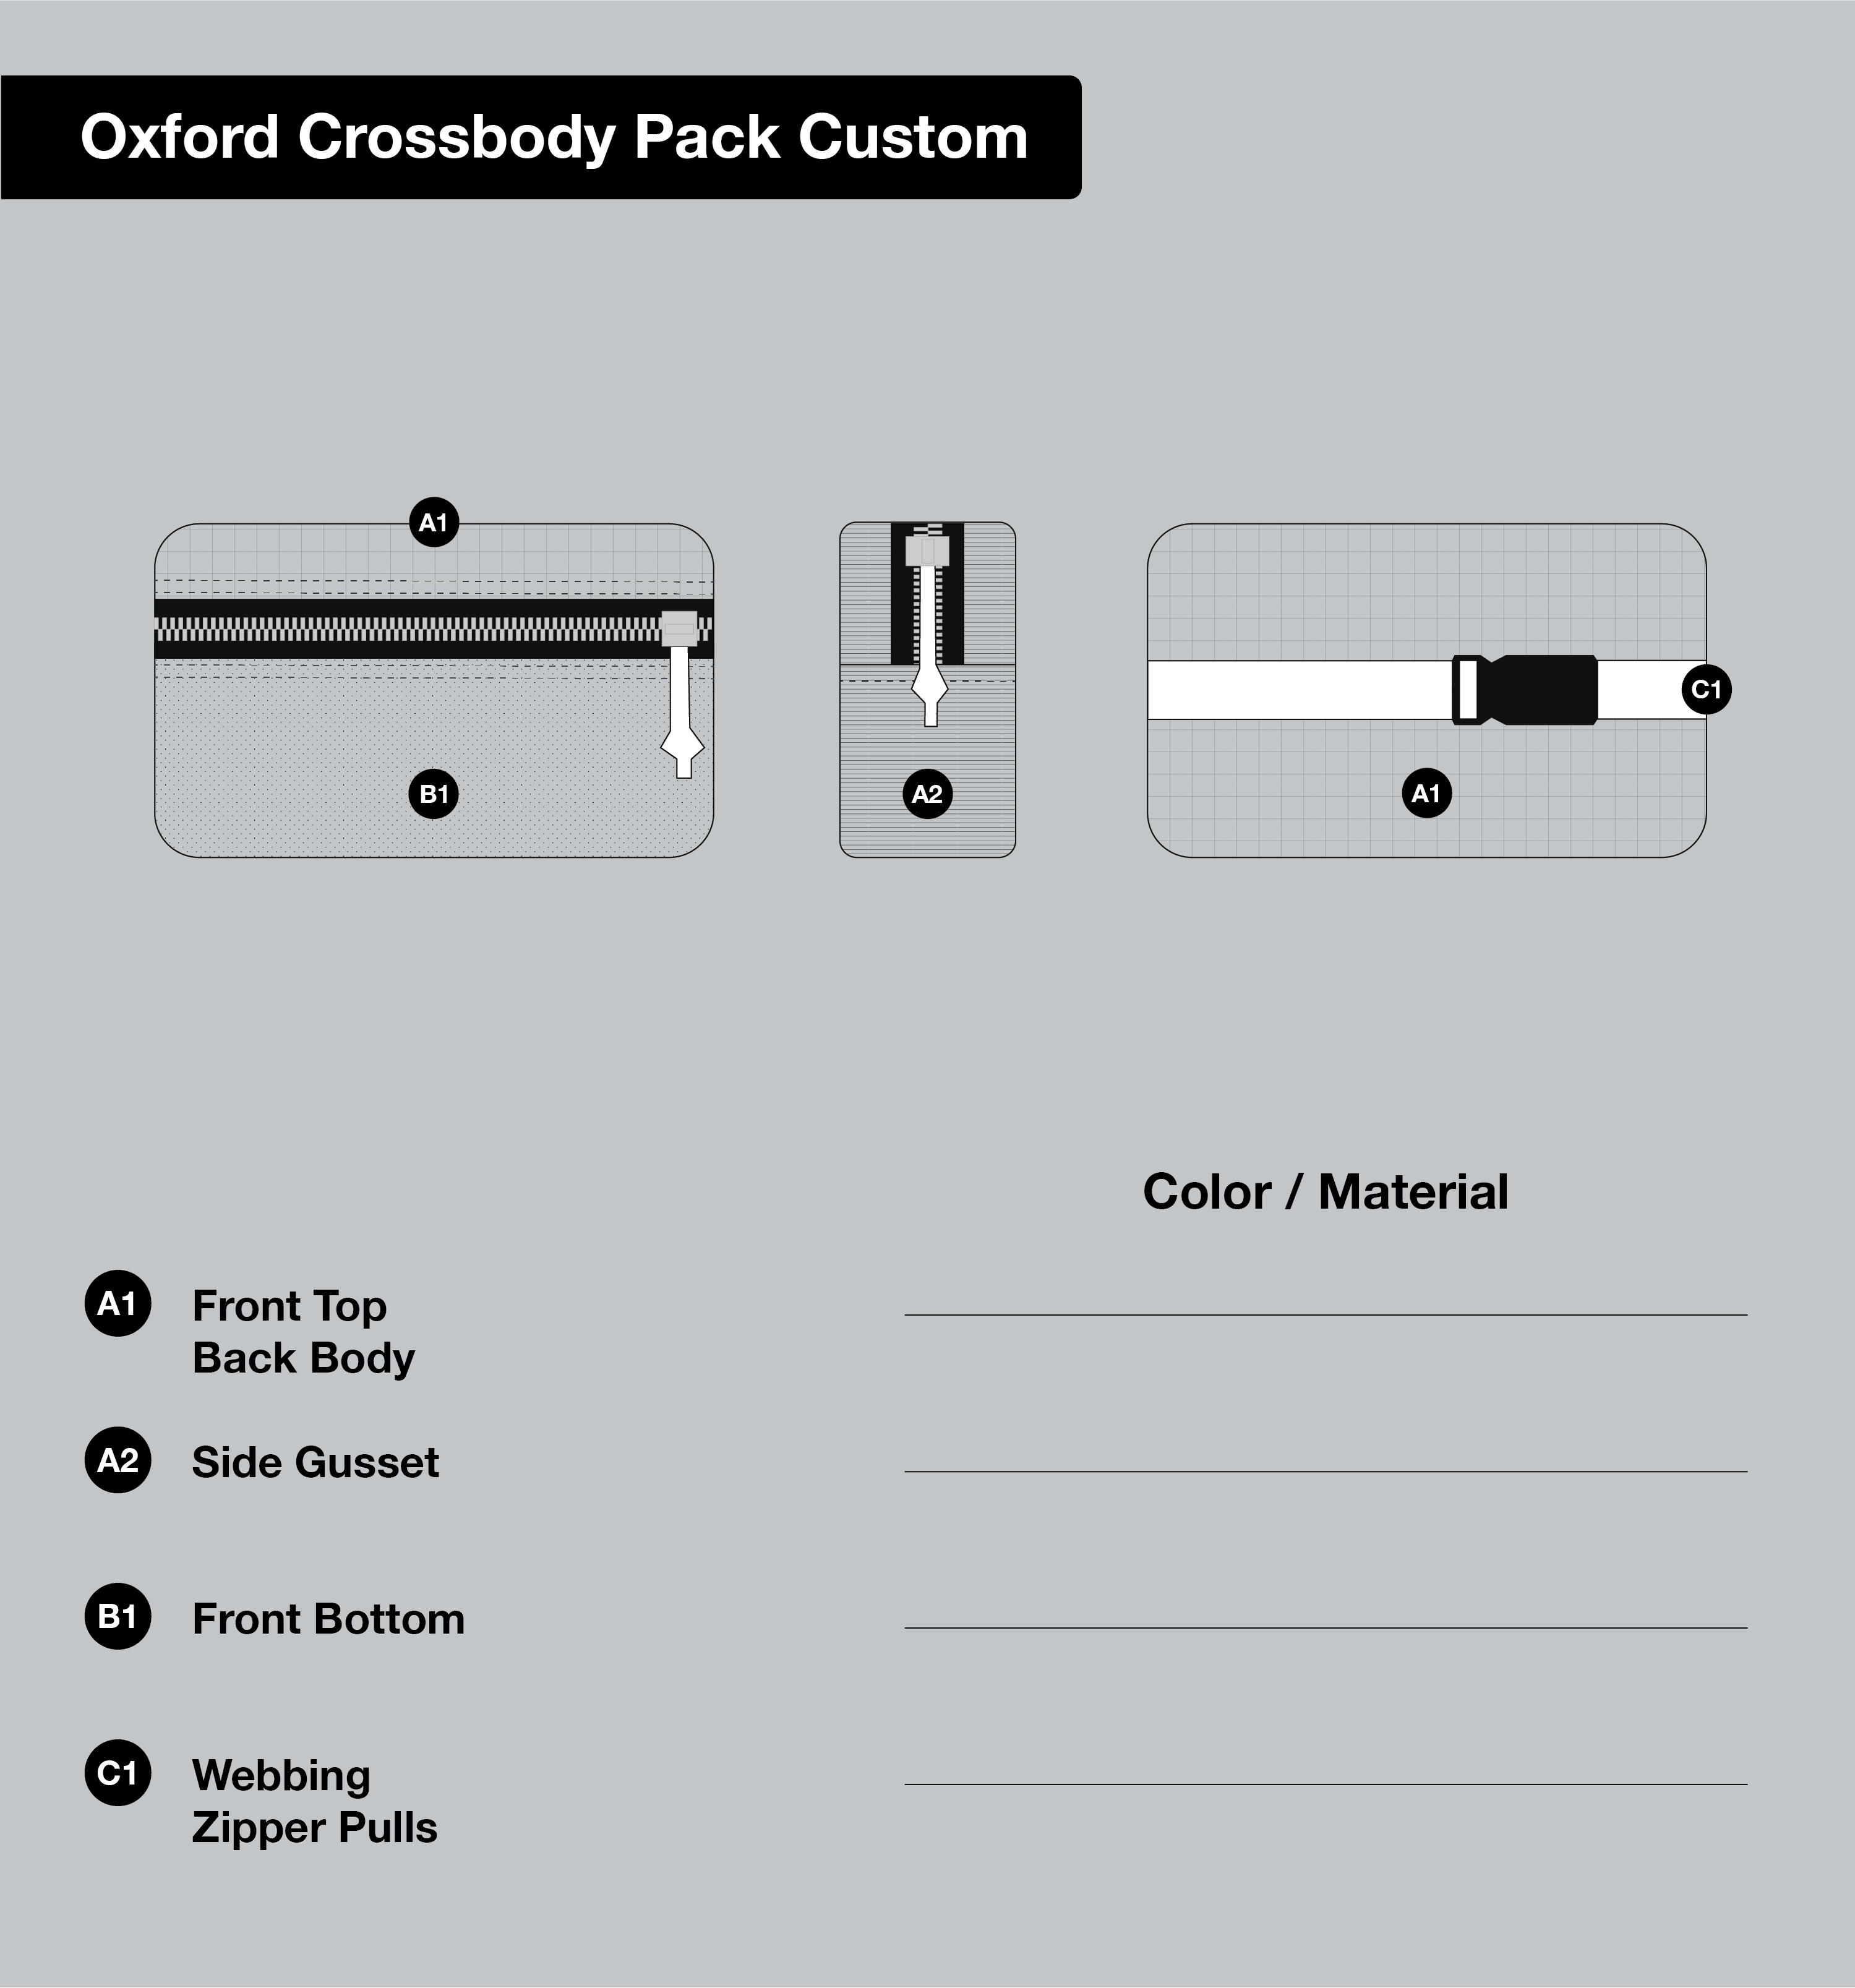 Oxford Crossbody Pack Custom